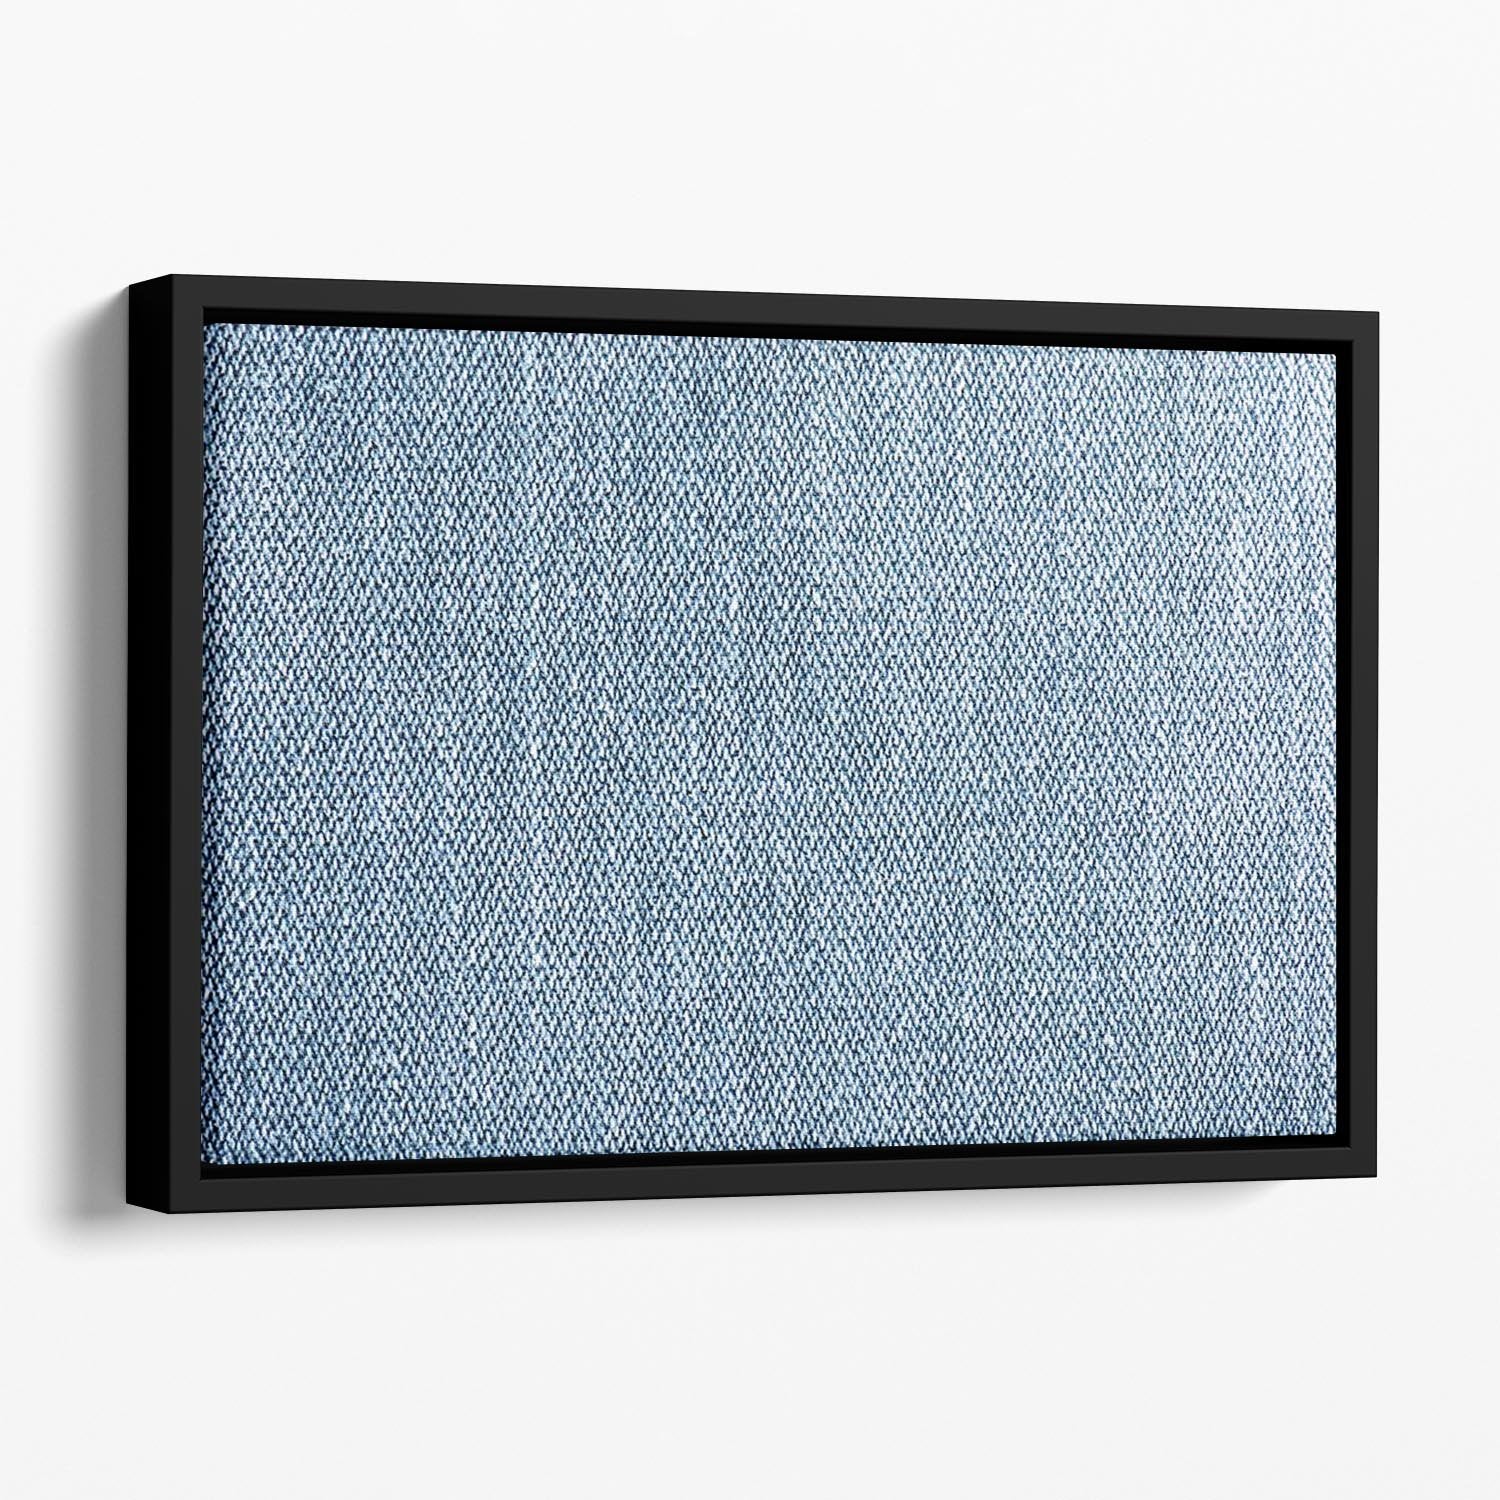 Blue denim texture Floating Framed Canvas - Canvas Art Rocks - 1